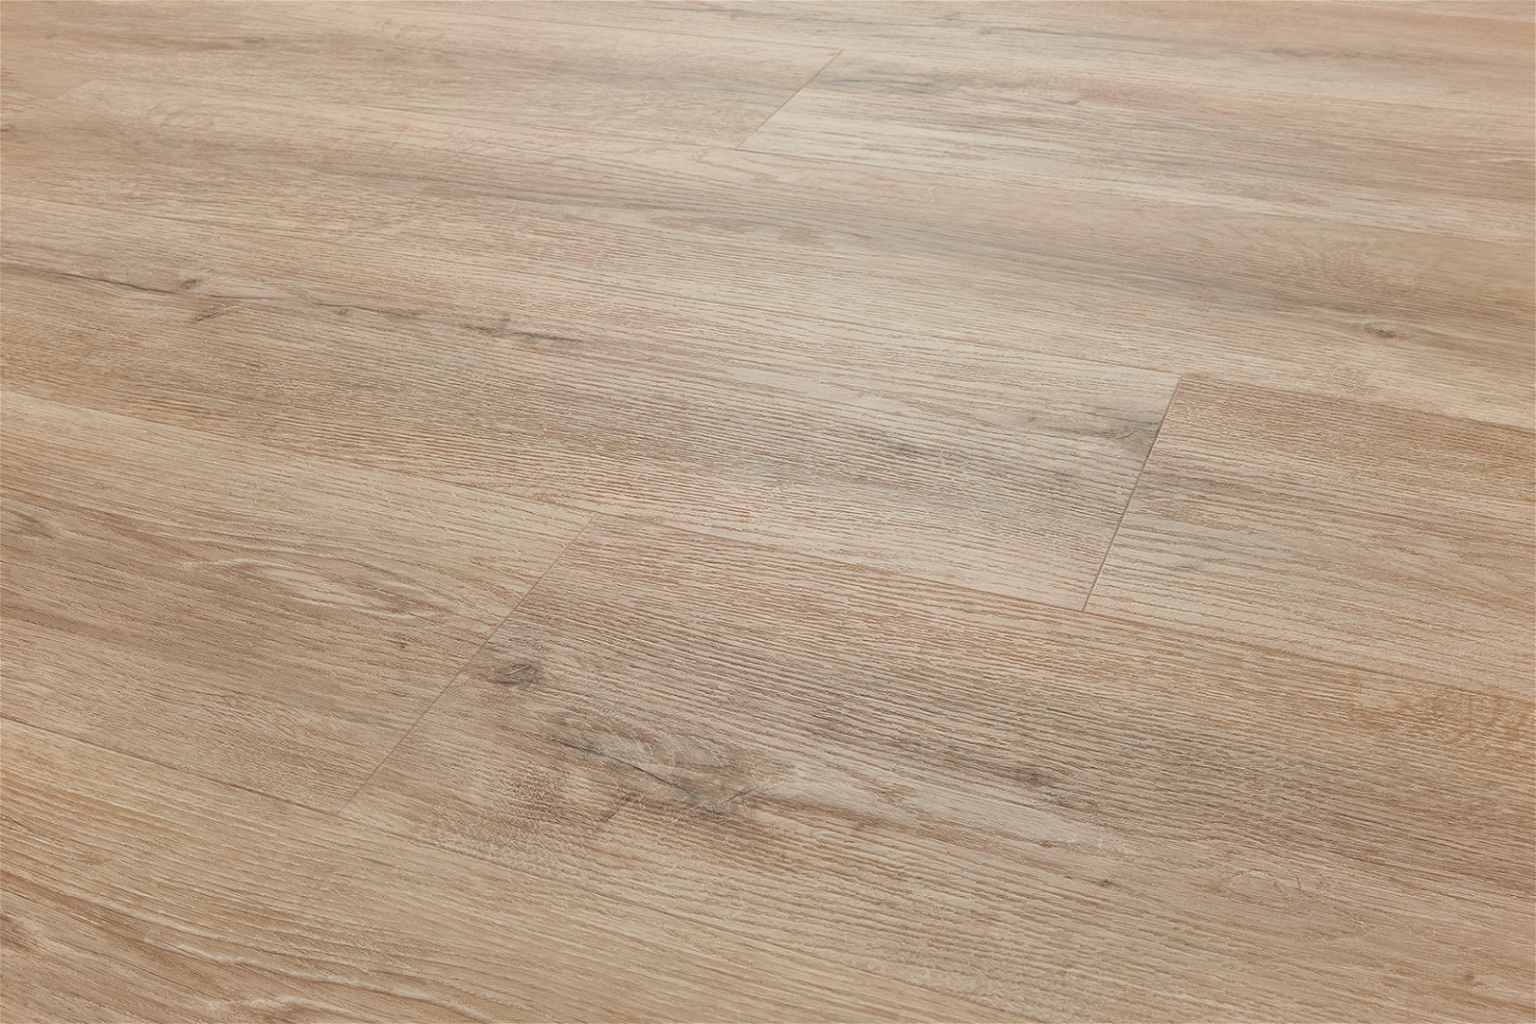 SPC vinilinės grindys AFIRMAX Legnar, 1220 x 229 x 4 mm, Šermano ąž.sp., dėvimasis 0,55 mm, 33 kl. - 1